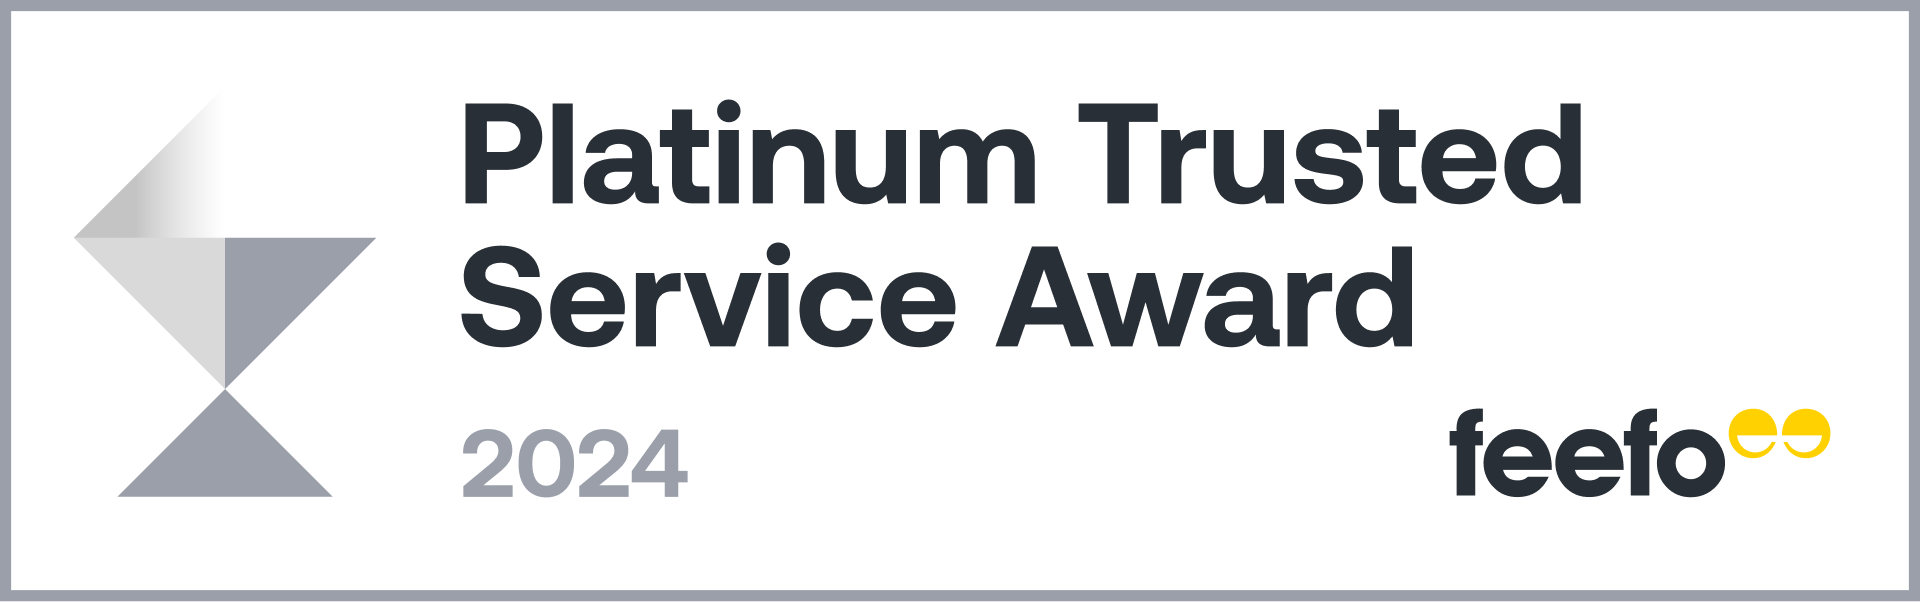 Feefo Platinium Trusted Service Award 2023